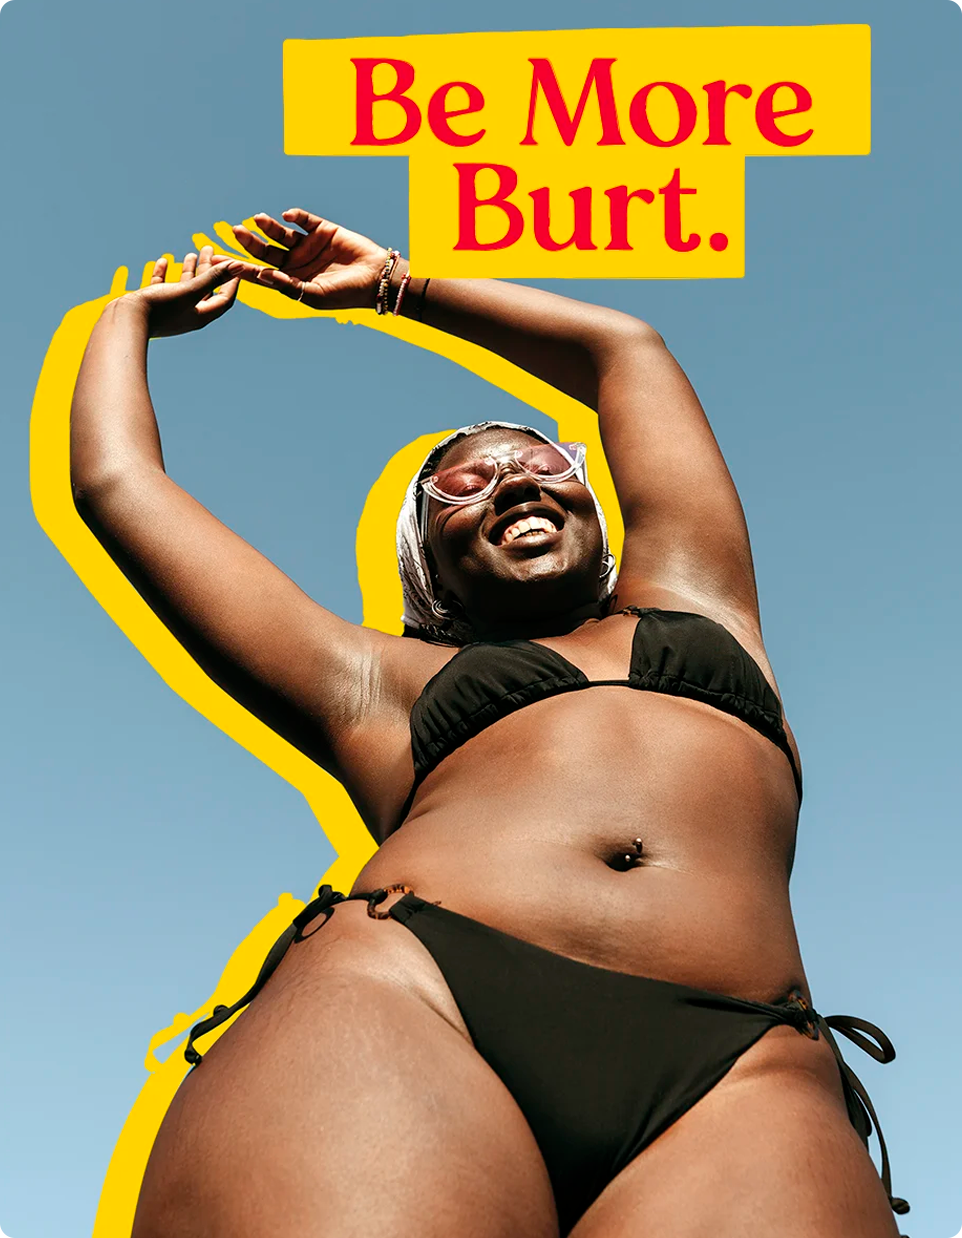 woman in bikini dancing, be more burt callout above her head